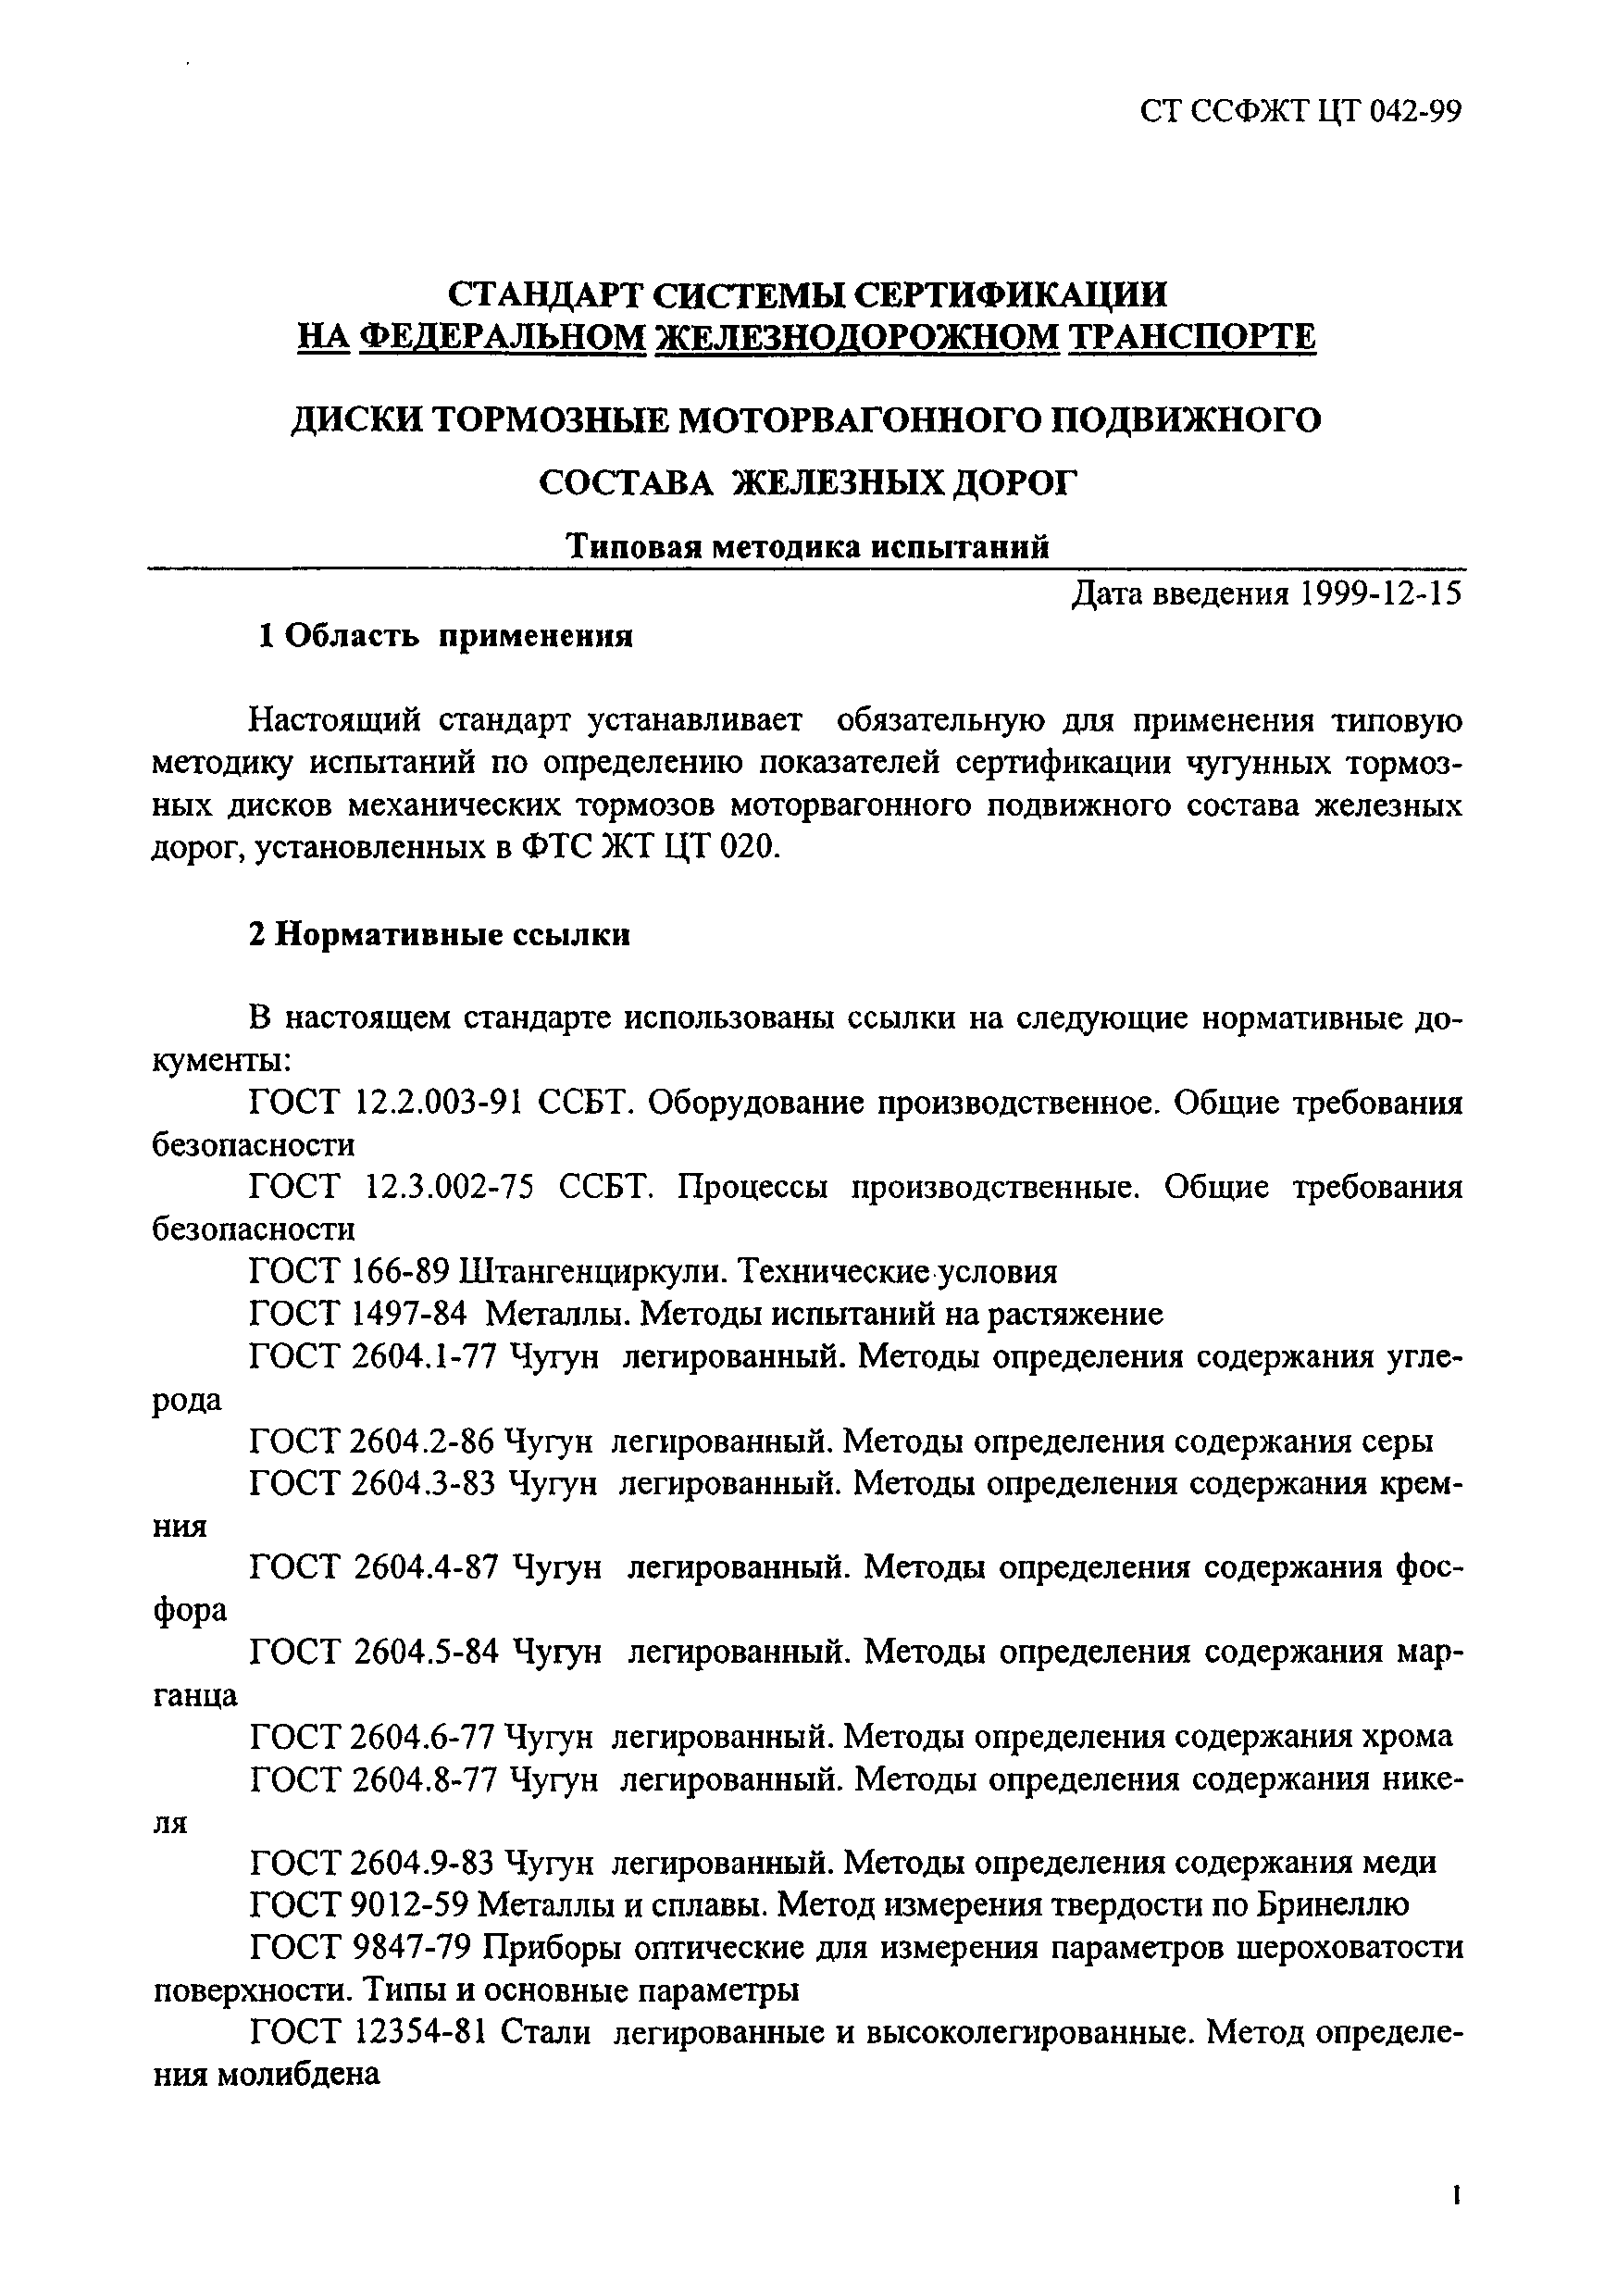 СТ ССФЖТ ЦТ 042-99